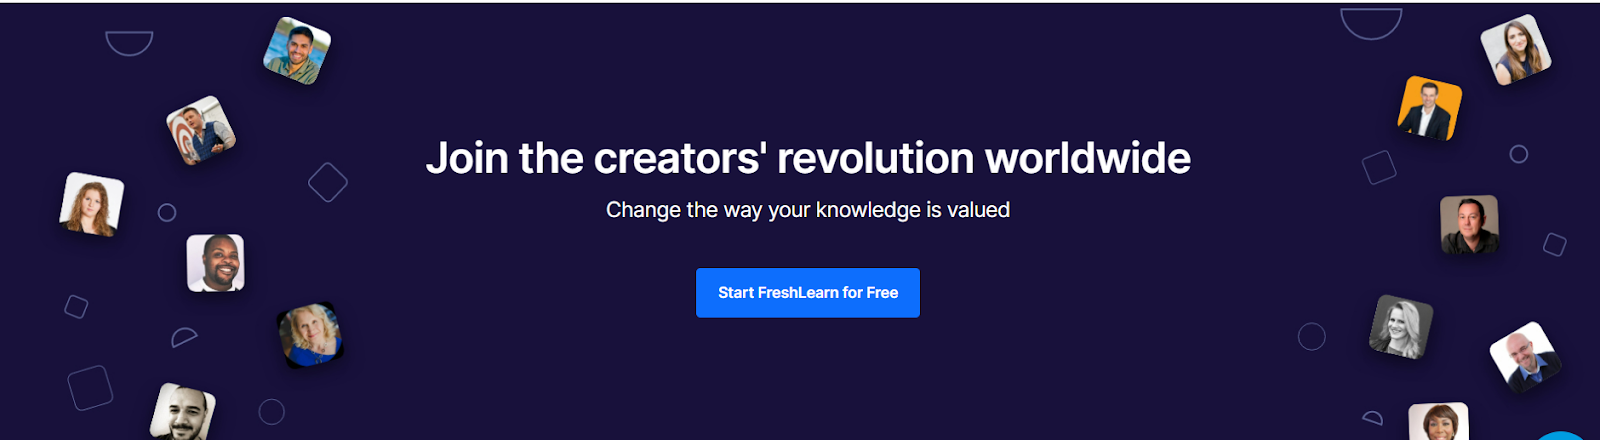 Creators community platform